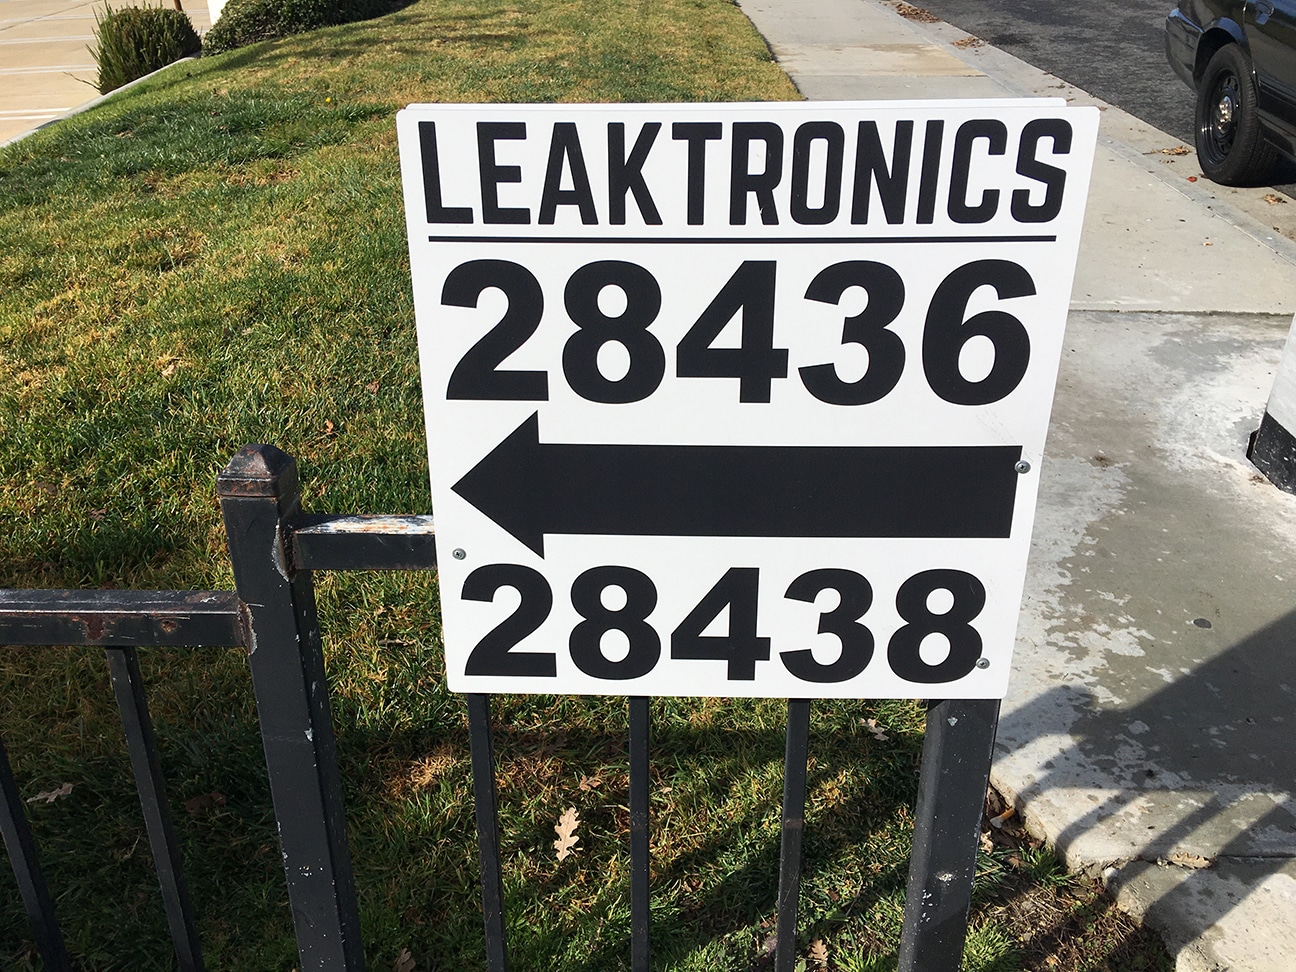 LeakTronics